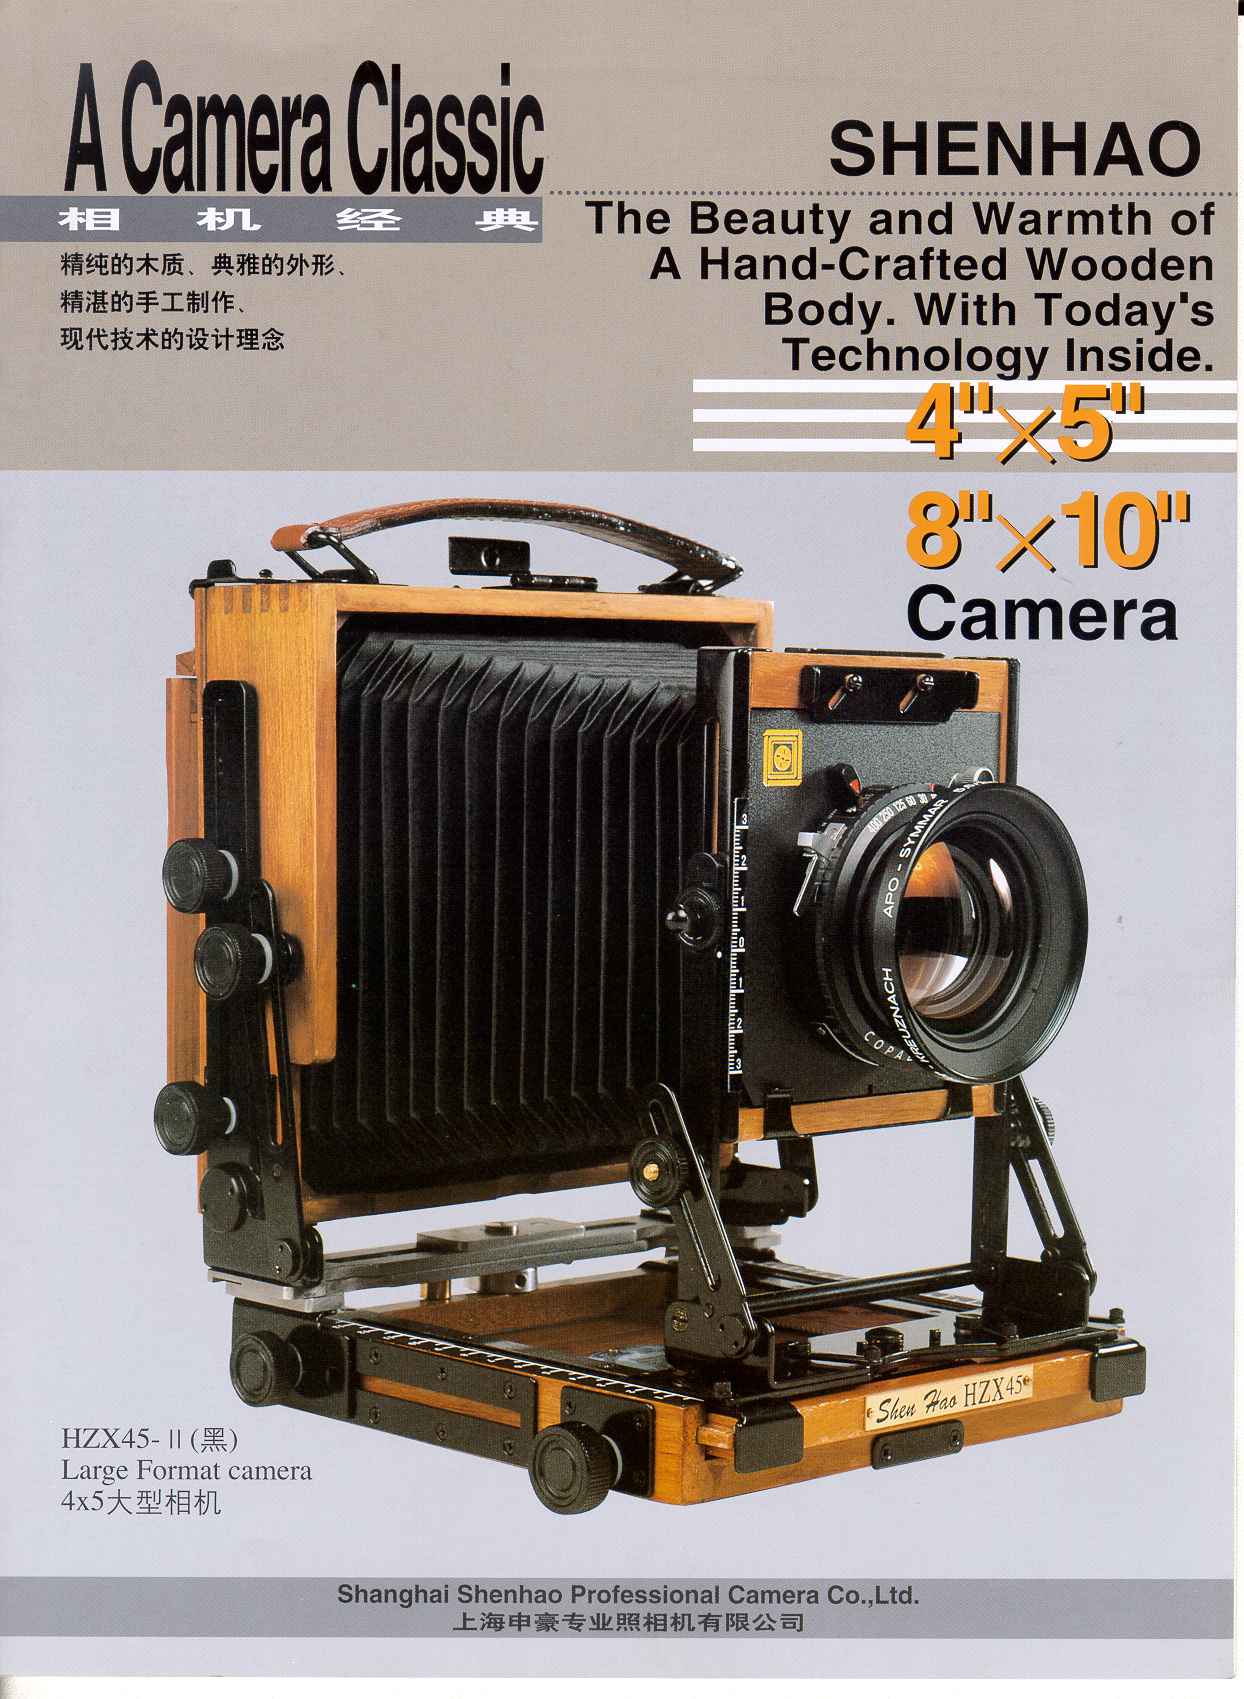 Large format cameras: The Shanghai Shenhao